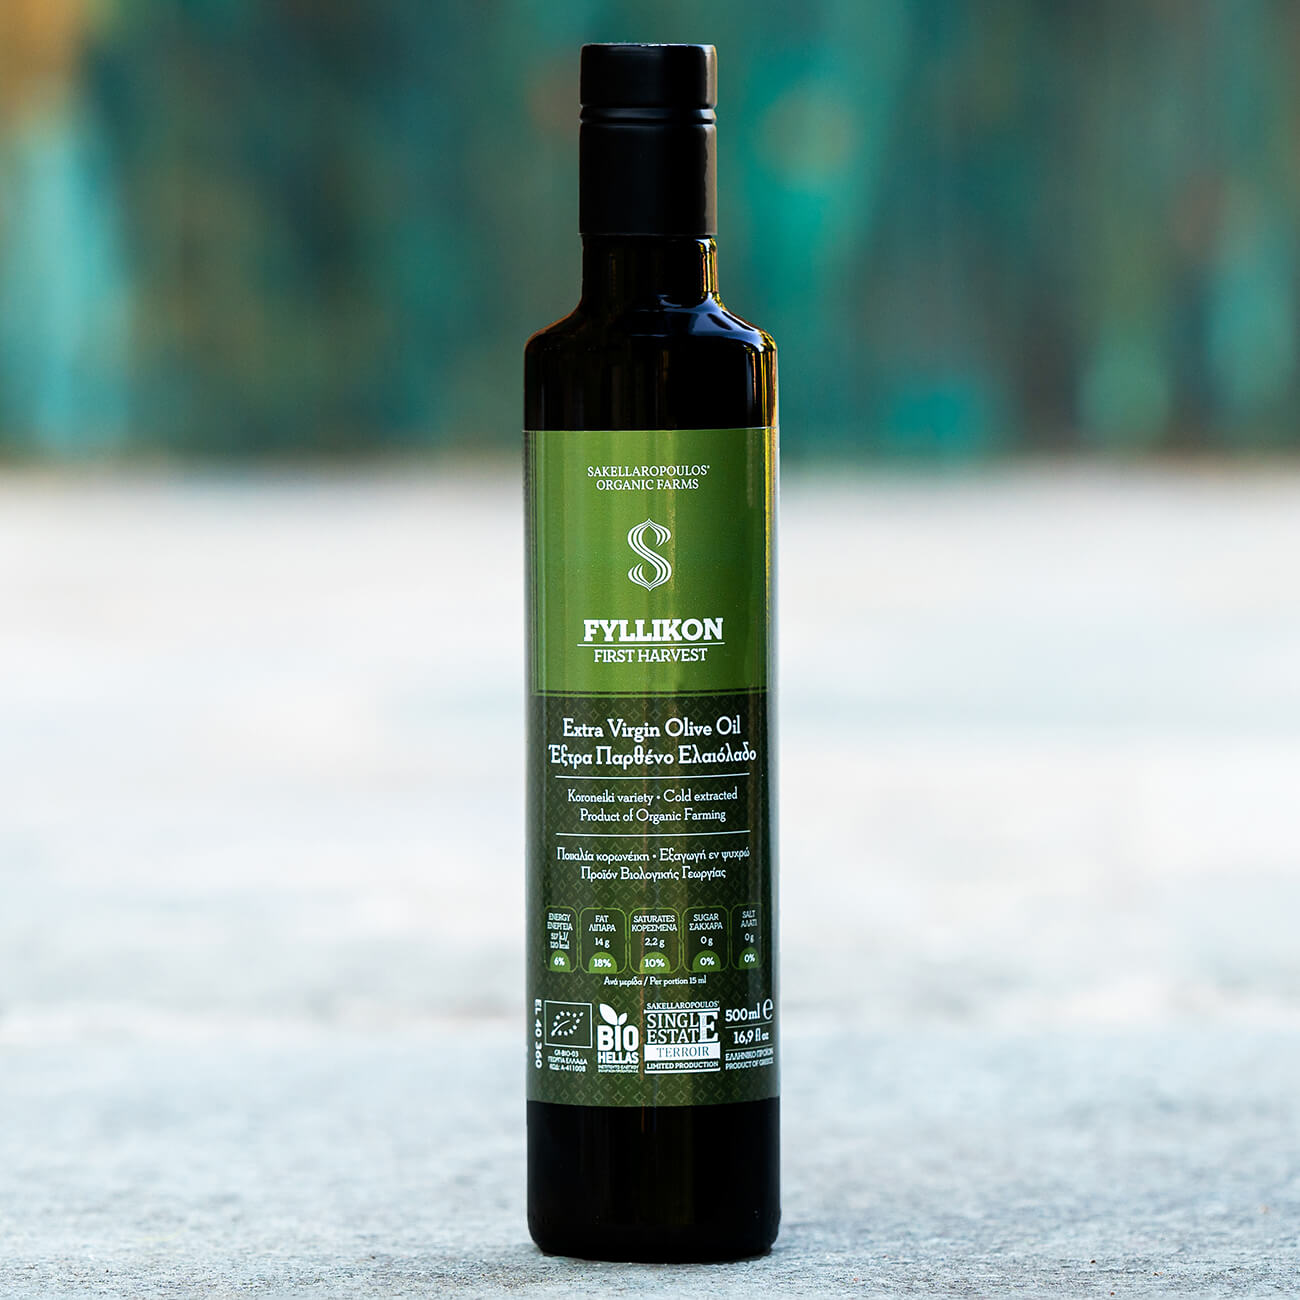 fyllikon evoo olive oil organic unripe first harvest polyphenols oleocanthal